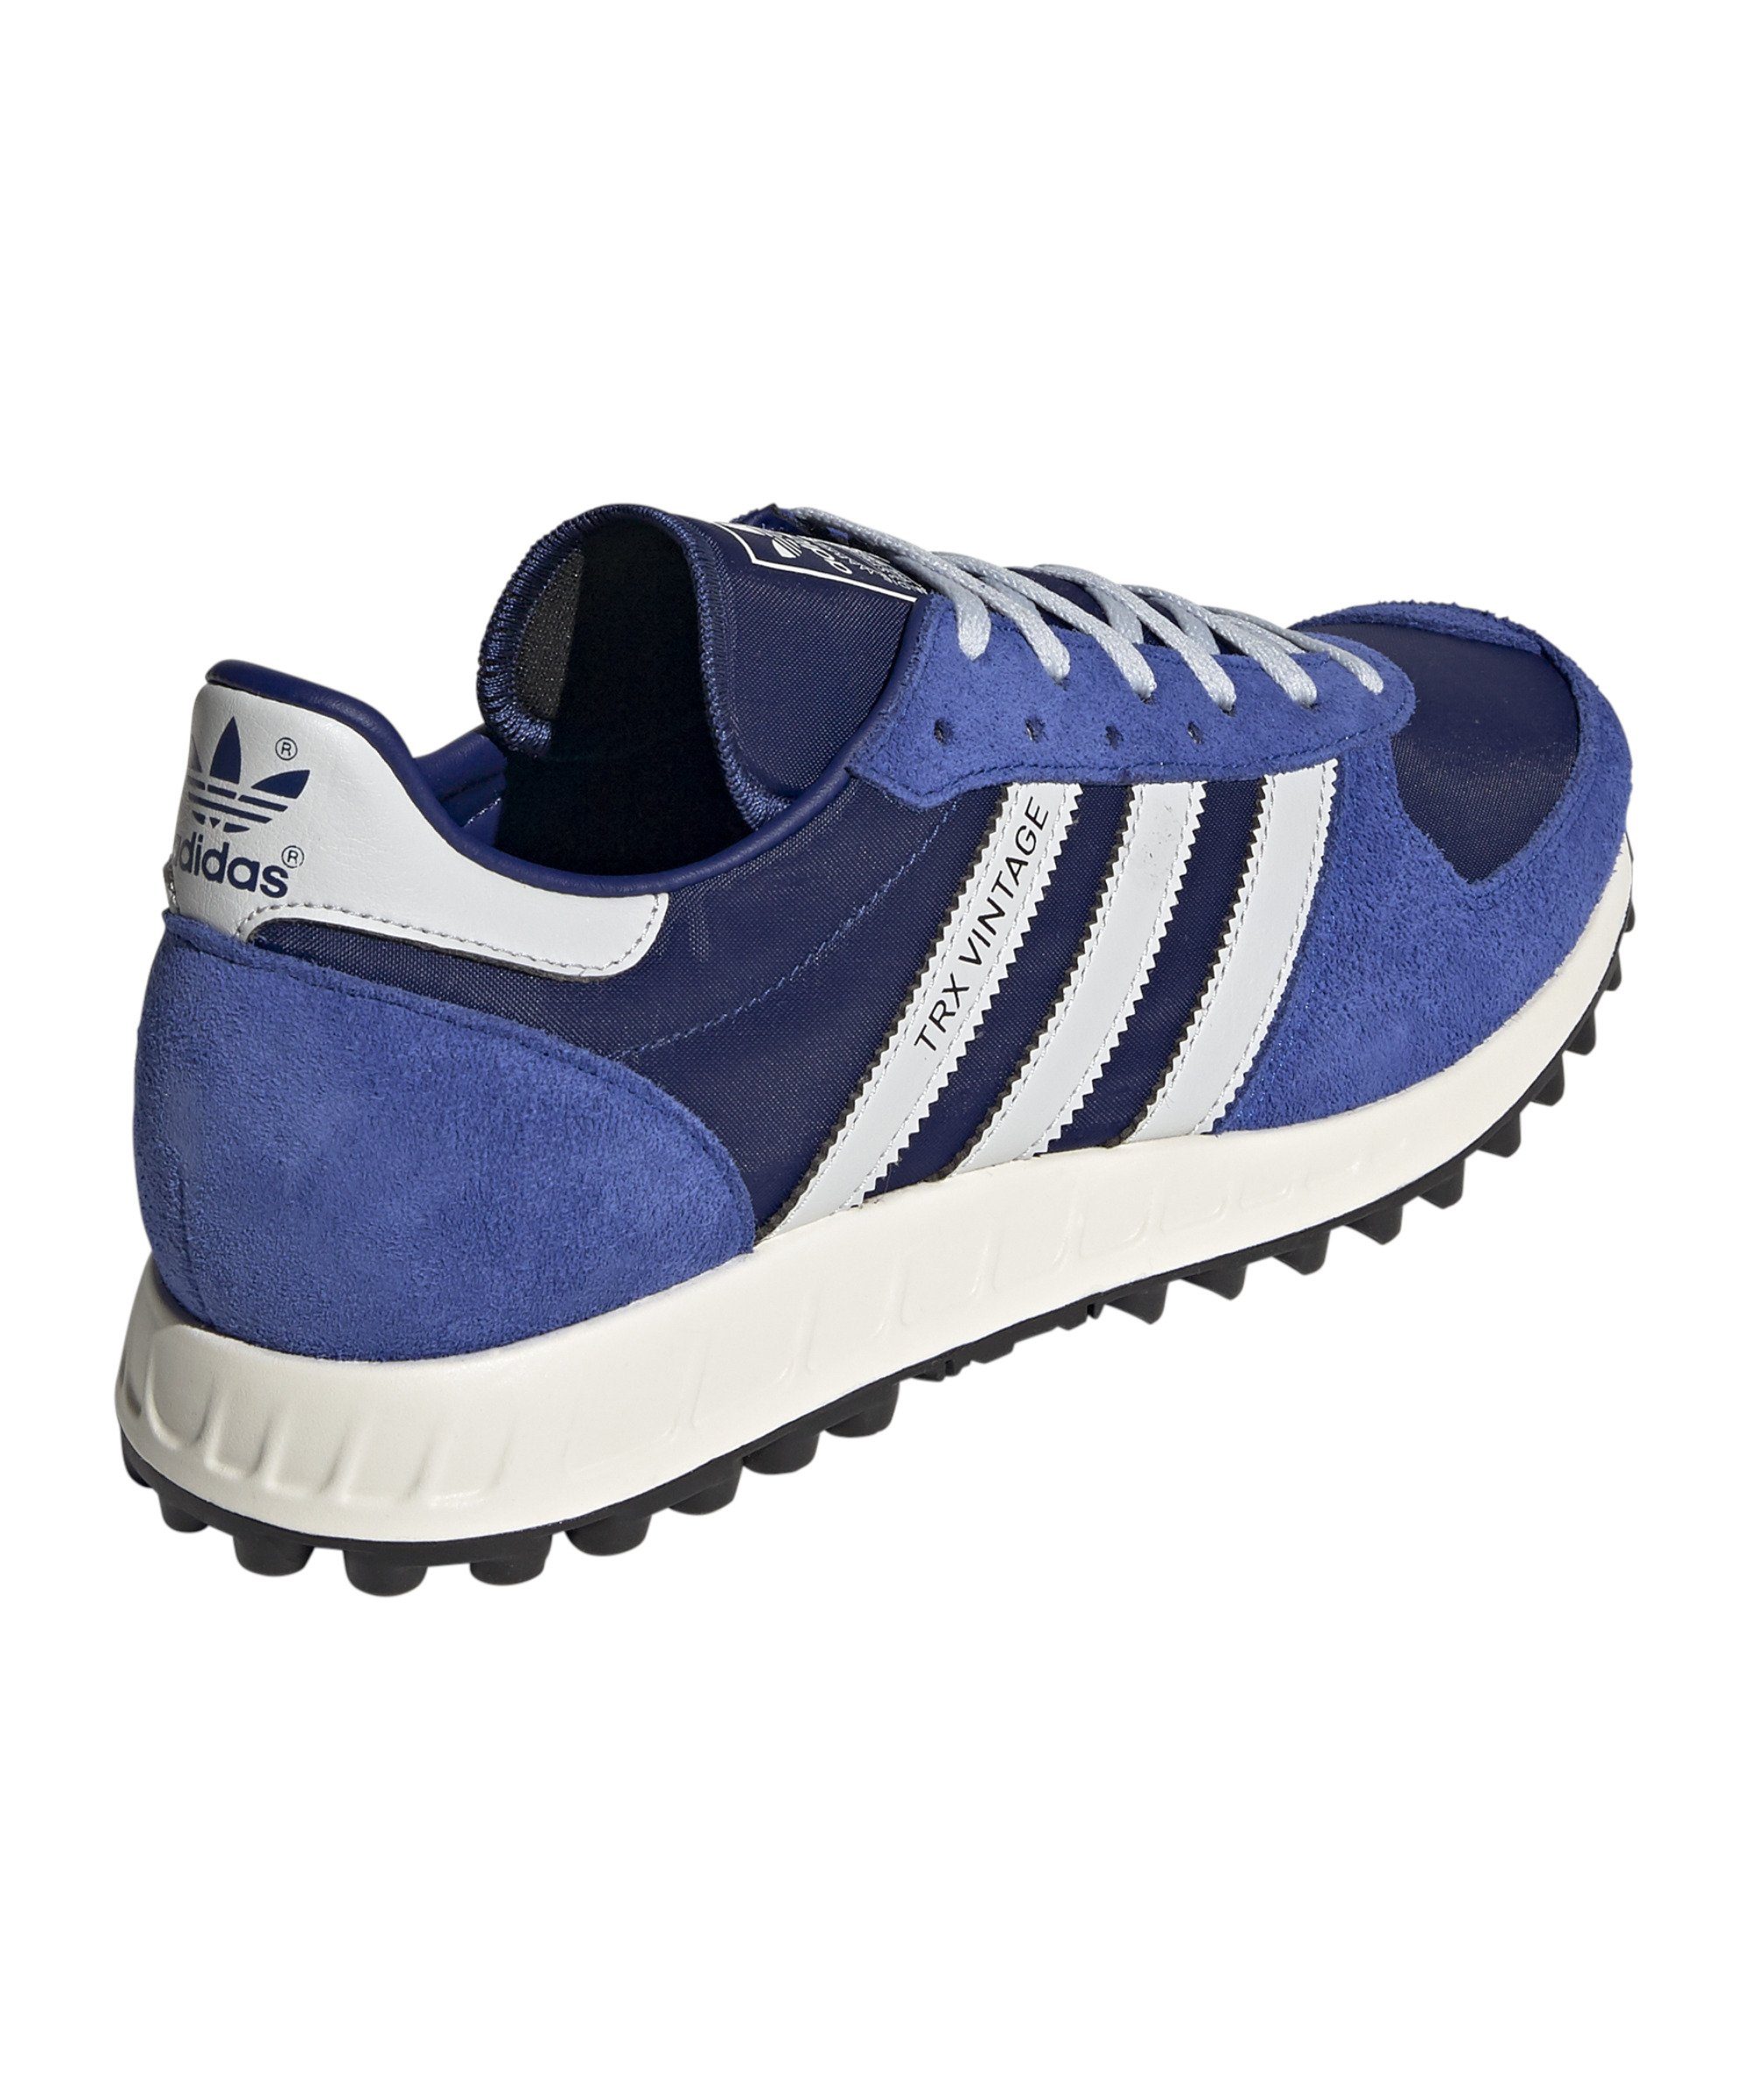 Beige blaugraugold TRX Originals Sneaker adidas Vintage